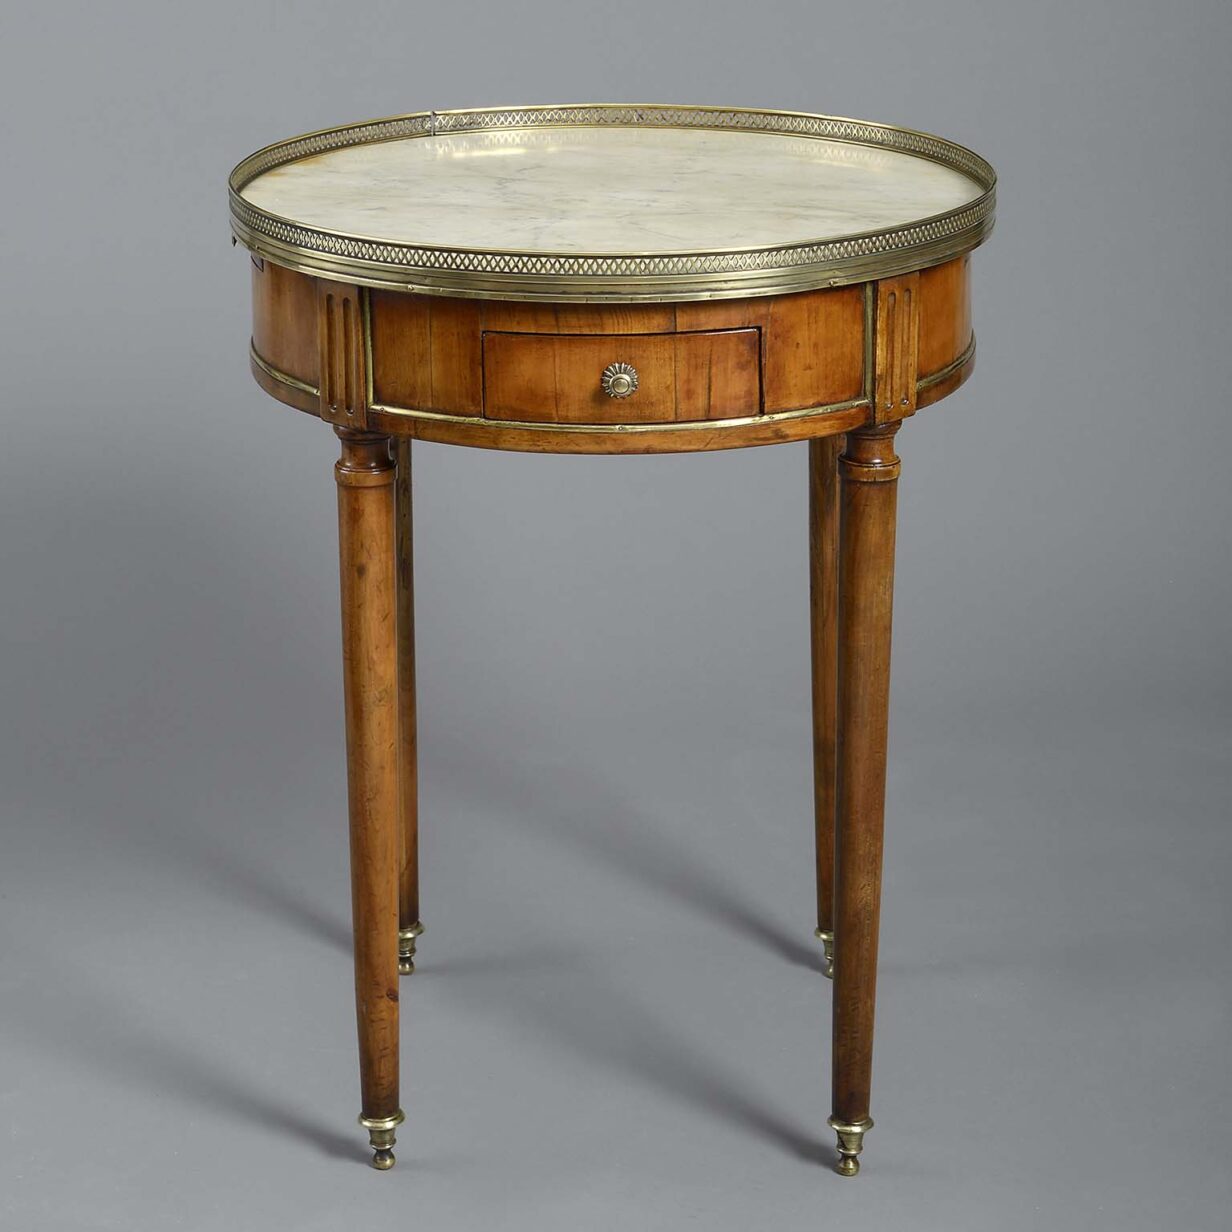 Late 18th century louis xvi period fruitwood bouillotte table